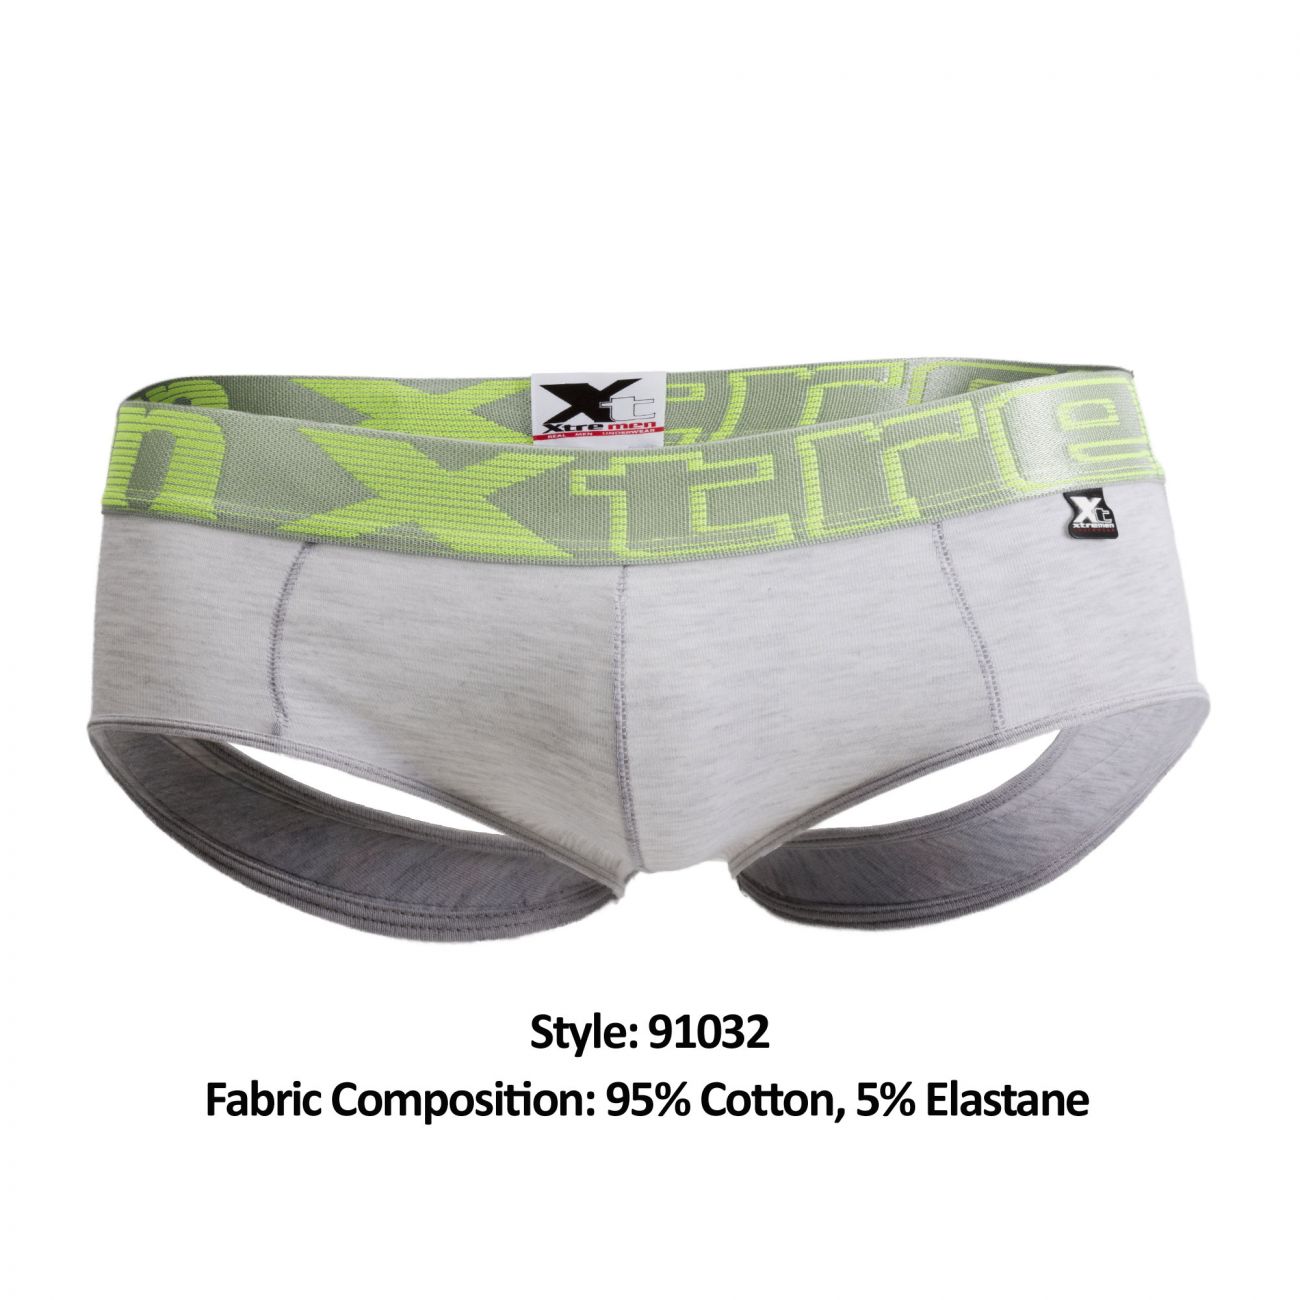 Mens Underwear: Xtremen 91032 Butt lifter Jockstrap | eBay